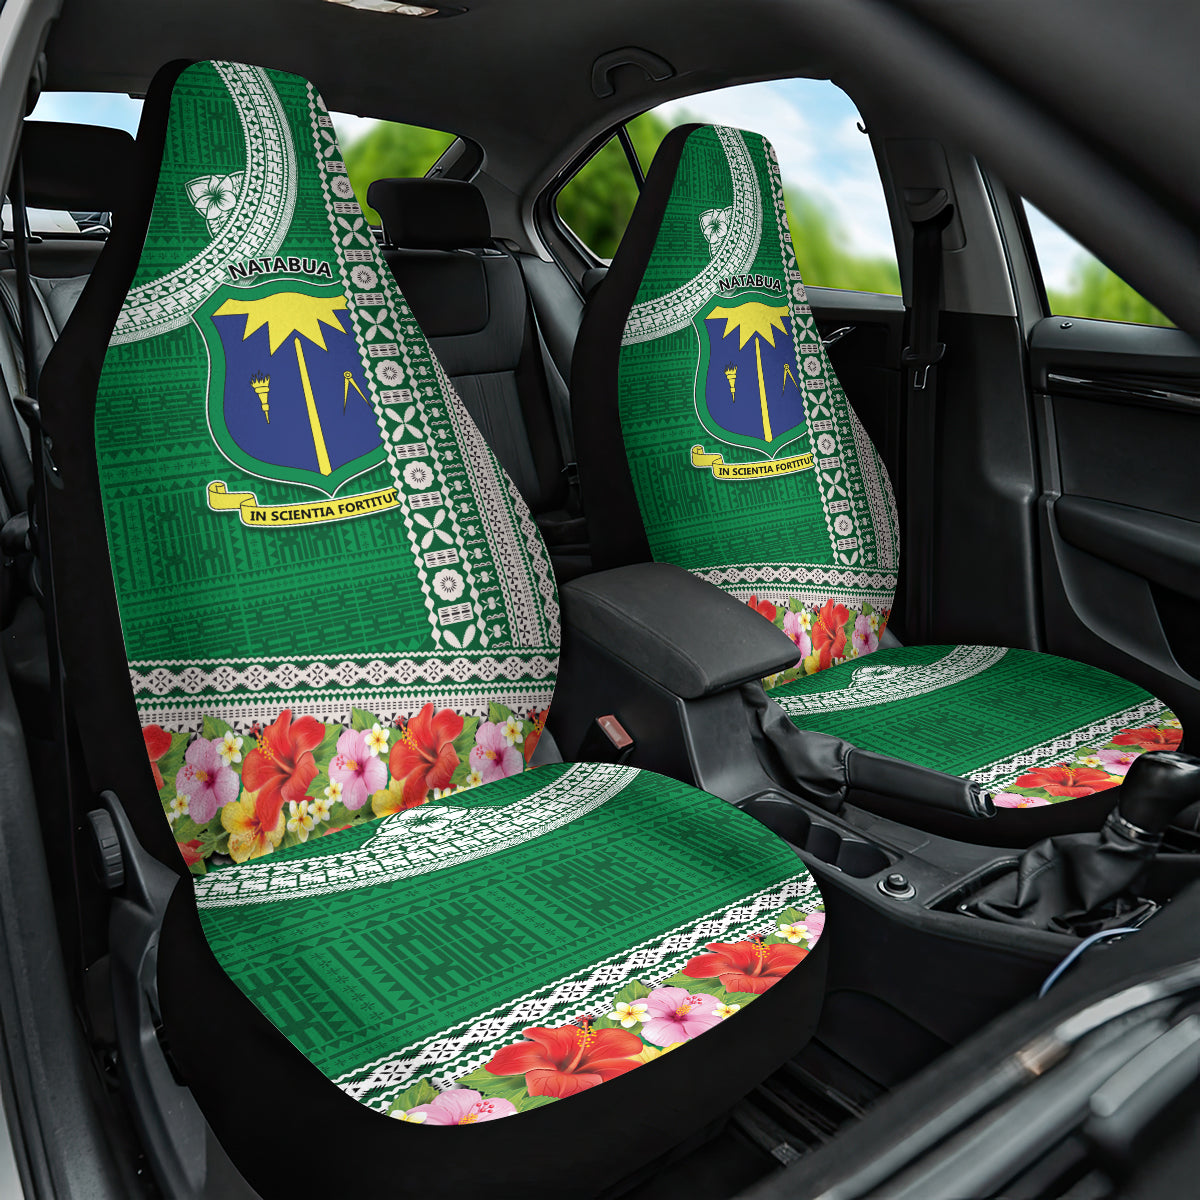 Fiji Natabua High School Car Seat Cover Tropical Flower and Tapa Pattern Green Style LT03 One Size Green - Polynesian Pride